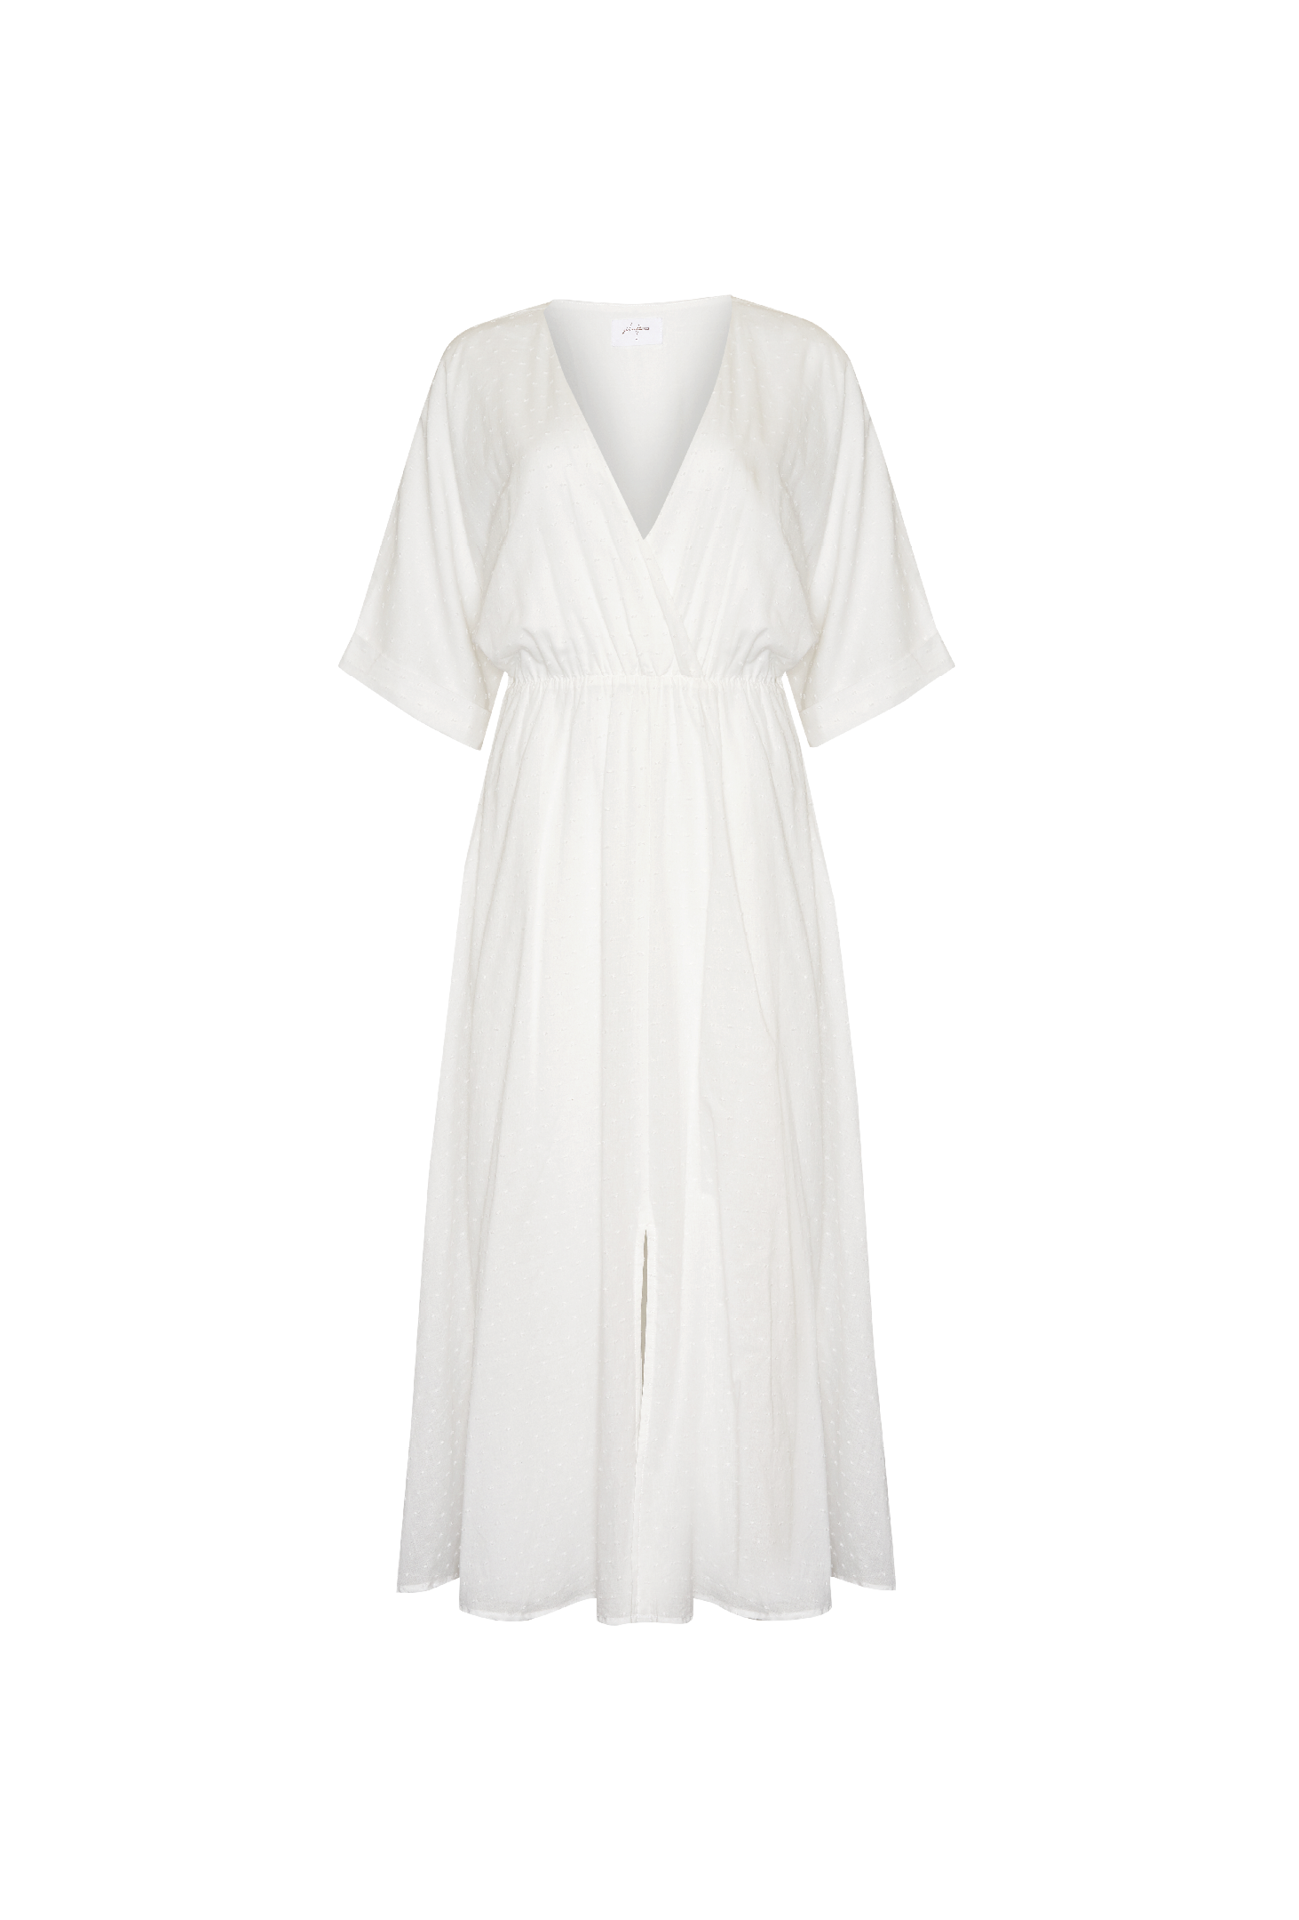 MARCY MAXI DRESS - WHITE SPOT